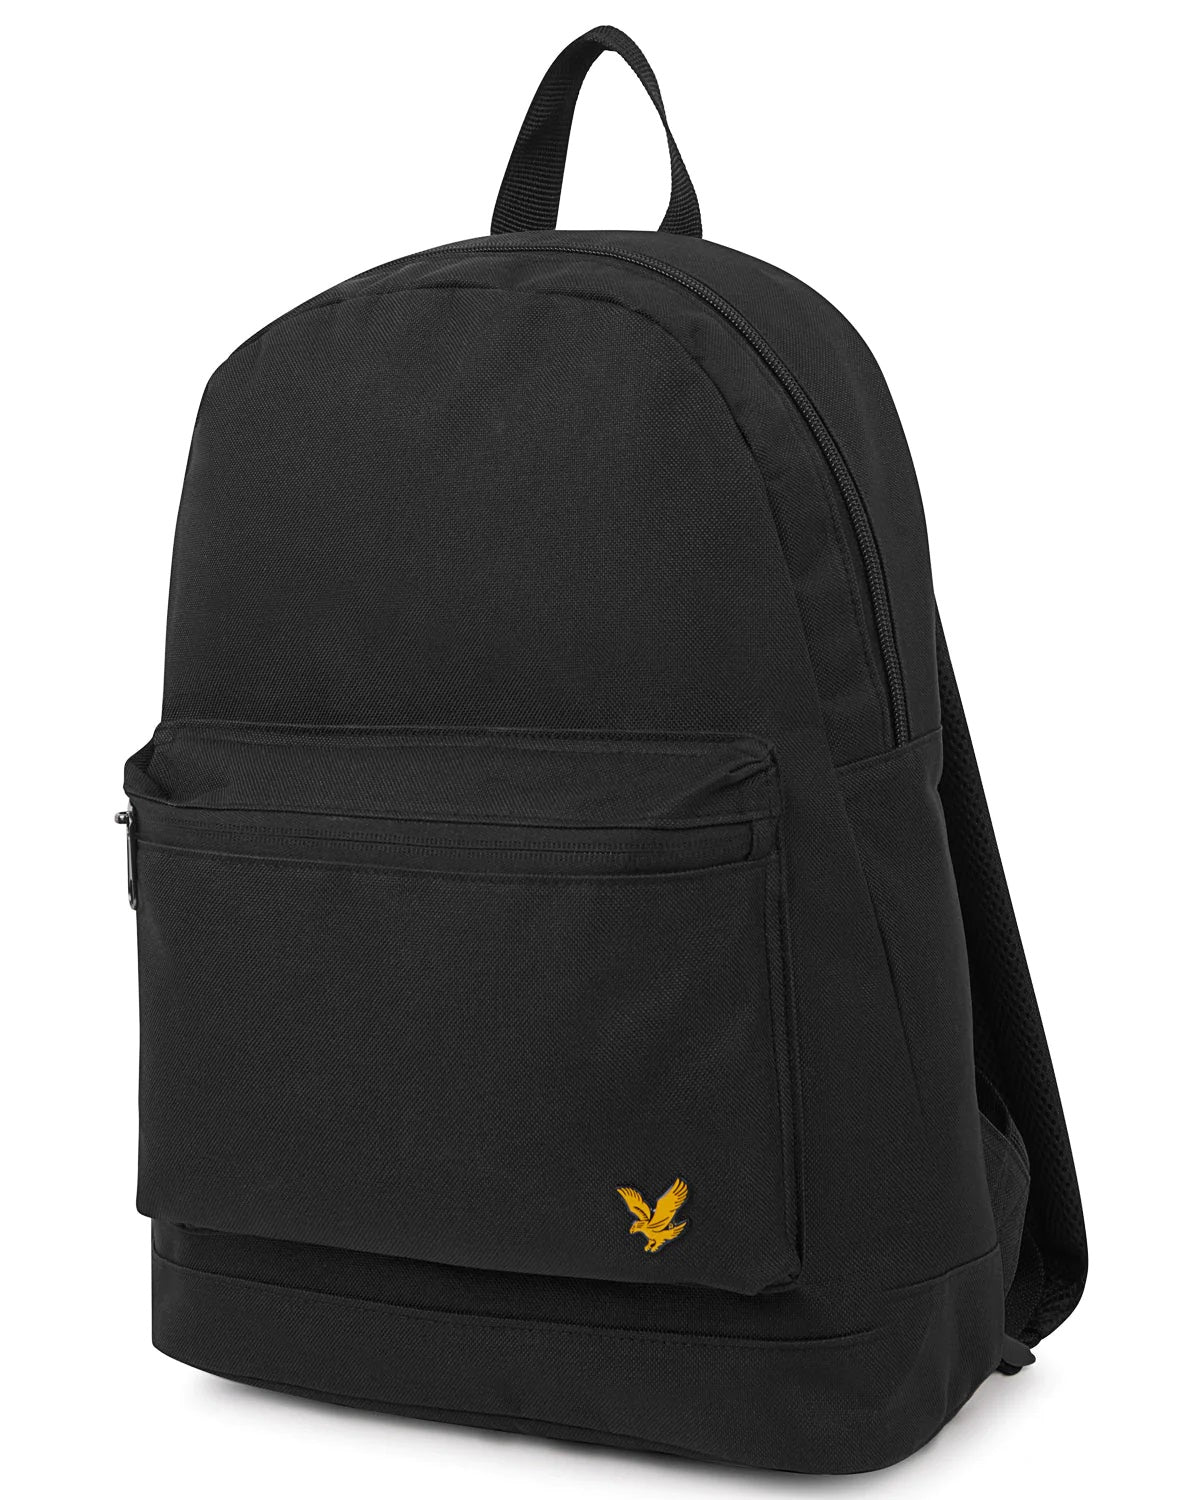 Lyle & Scott Classic Backpack/ Rucksack With Golden Eagle Logo, 01, Ba1200A